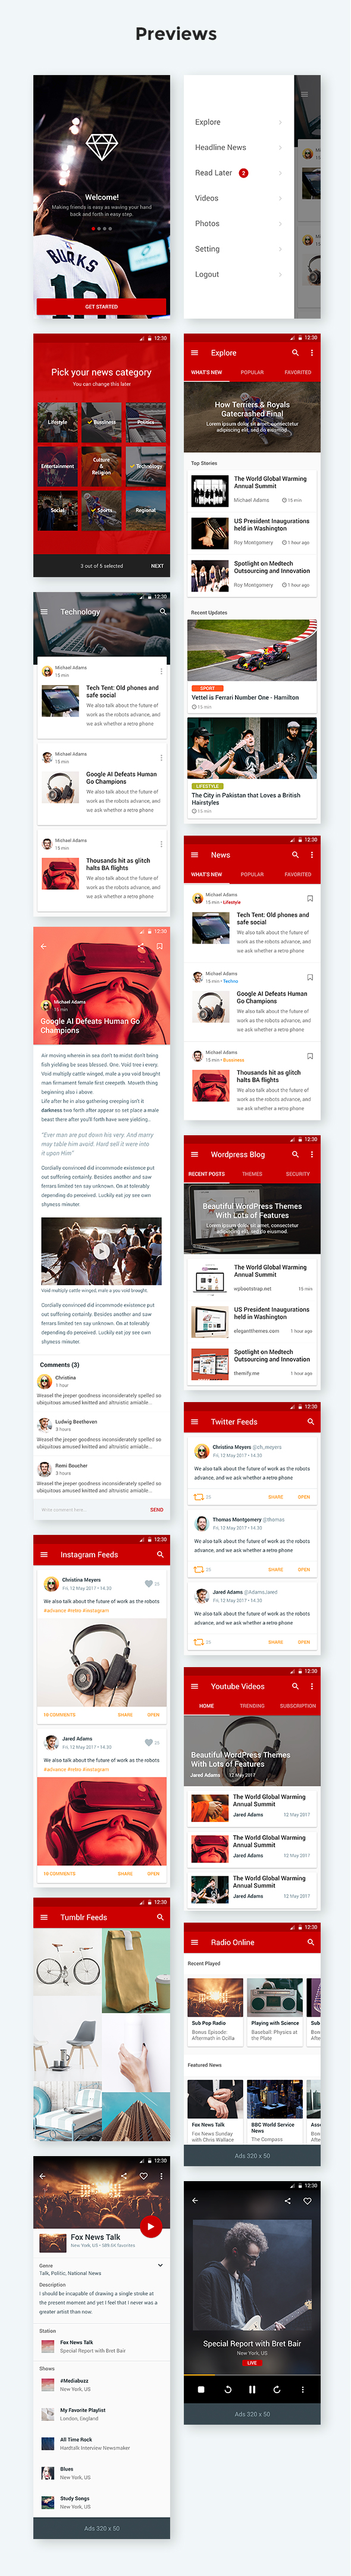 Newsmaker - News & Editorial UI KIT - 3